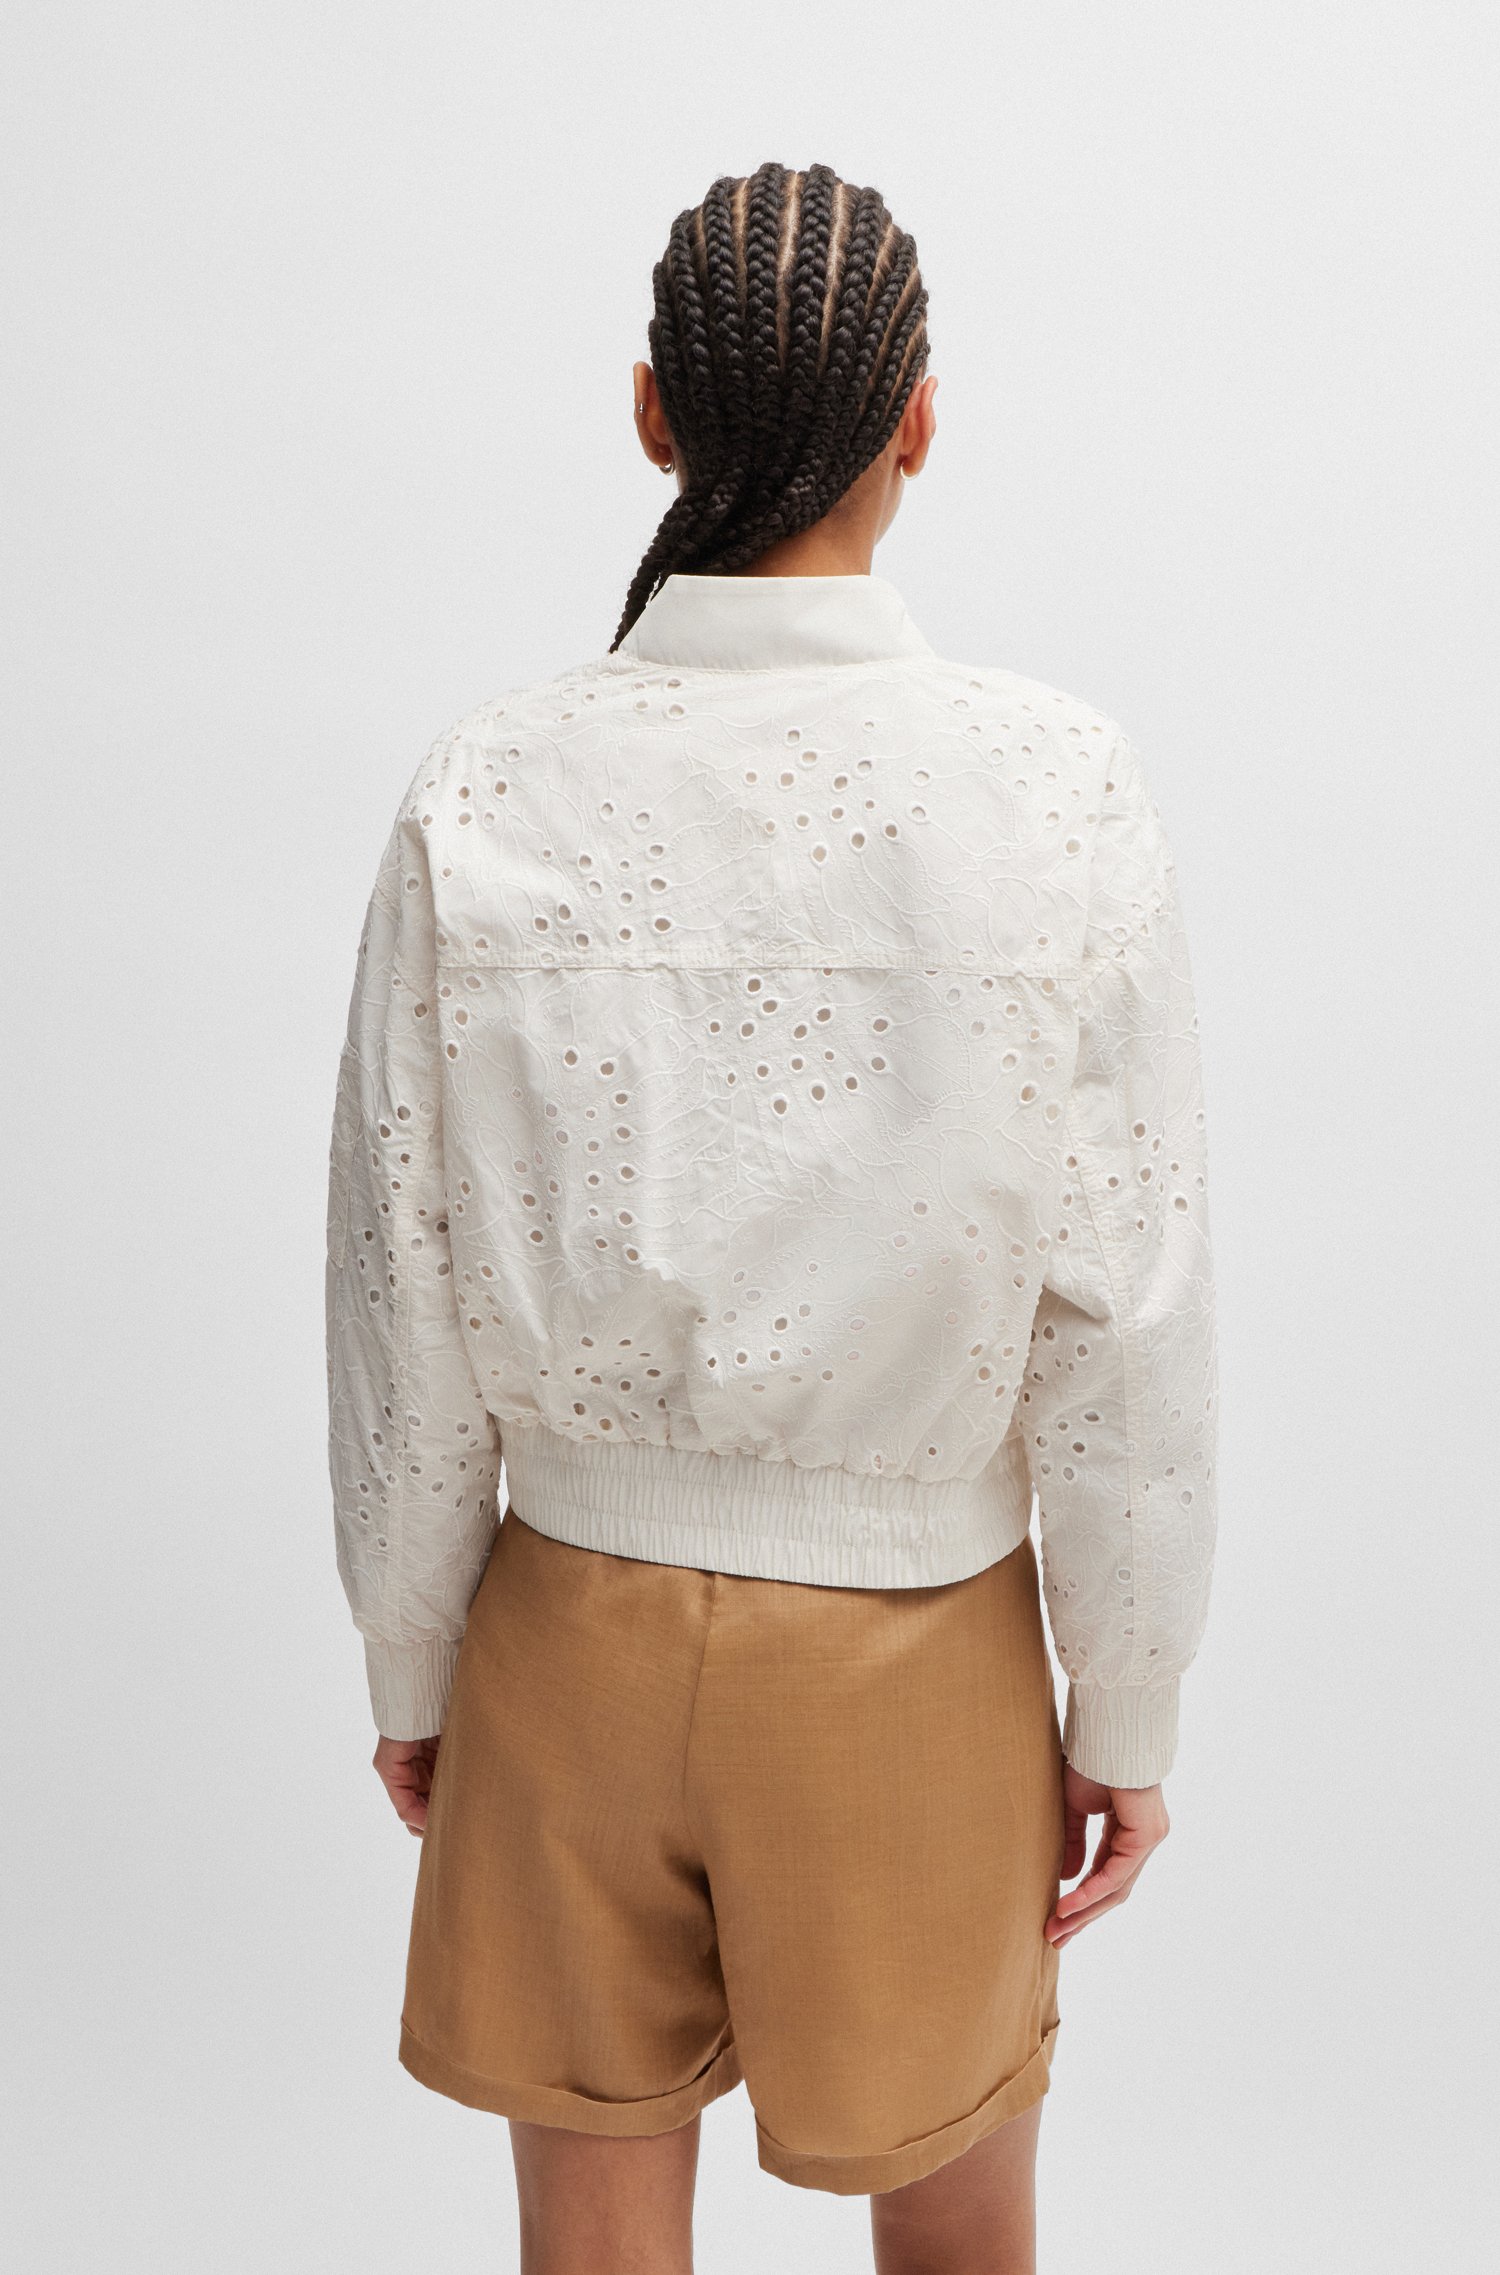 Embroidered bomber jacket with zipped sleeve pocket